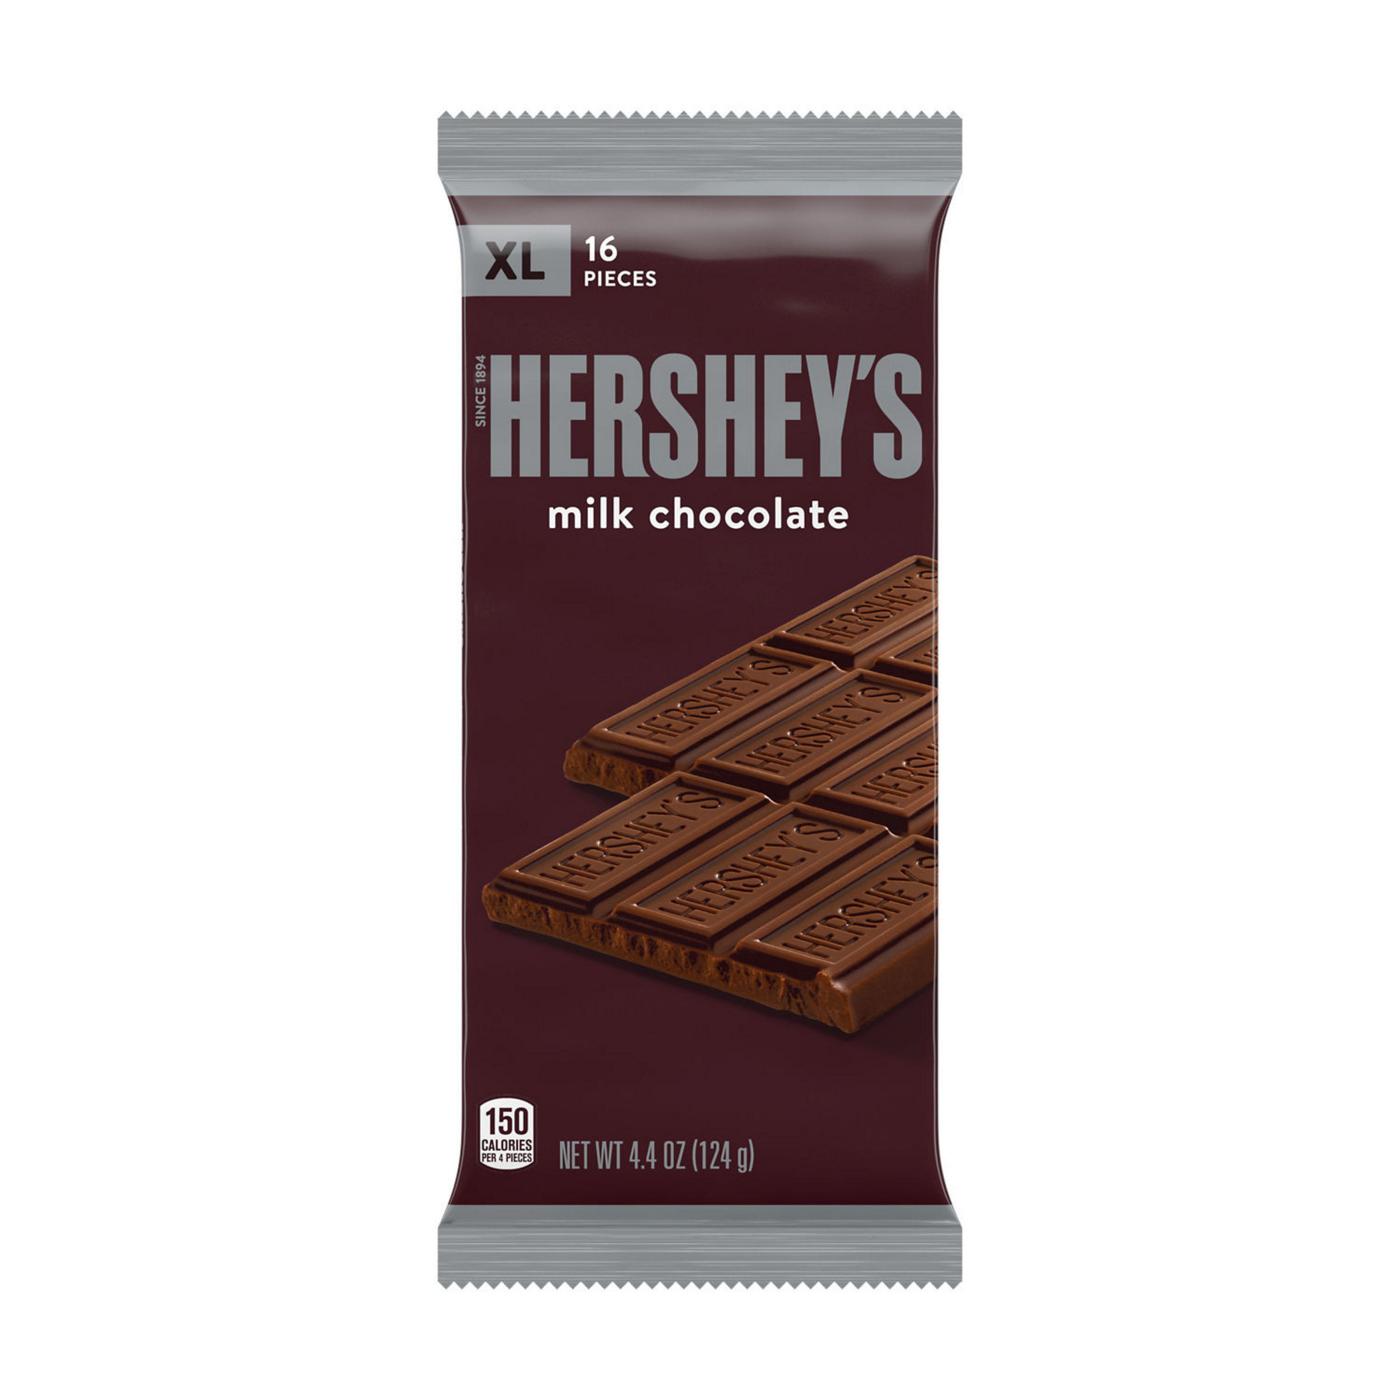 Hershey's Milk Chocolate XL Candy Bar; image 1 of 7